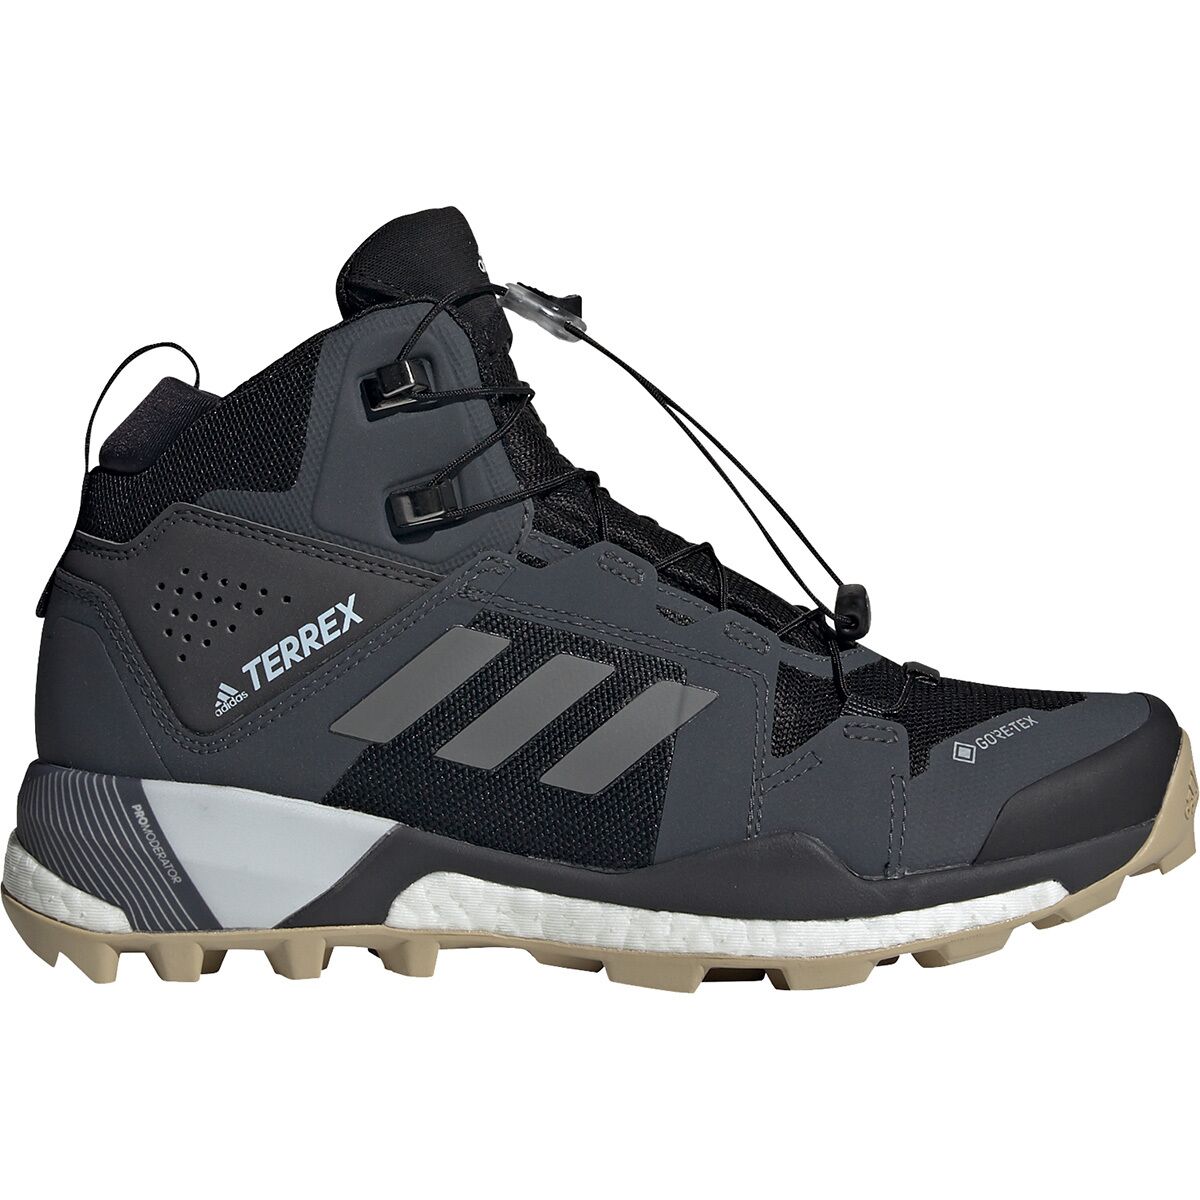 Adidas Outdoor Terrex Skychaser XT GTX Mid Hiking Boot - Women's ...